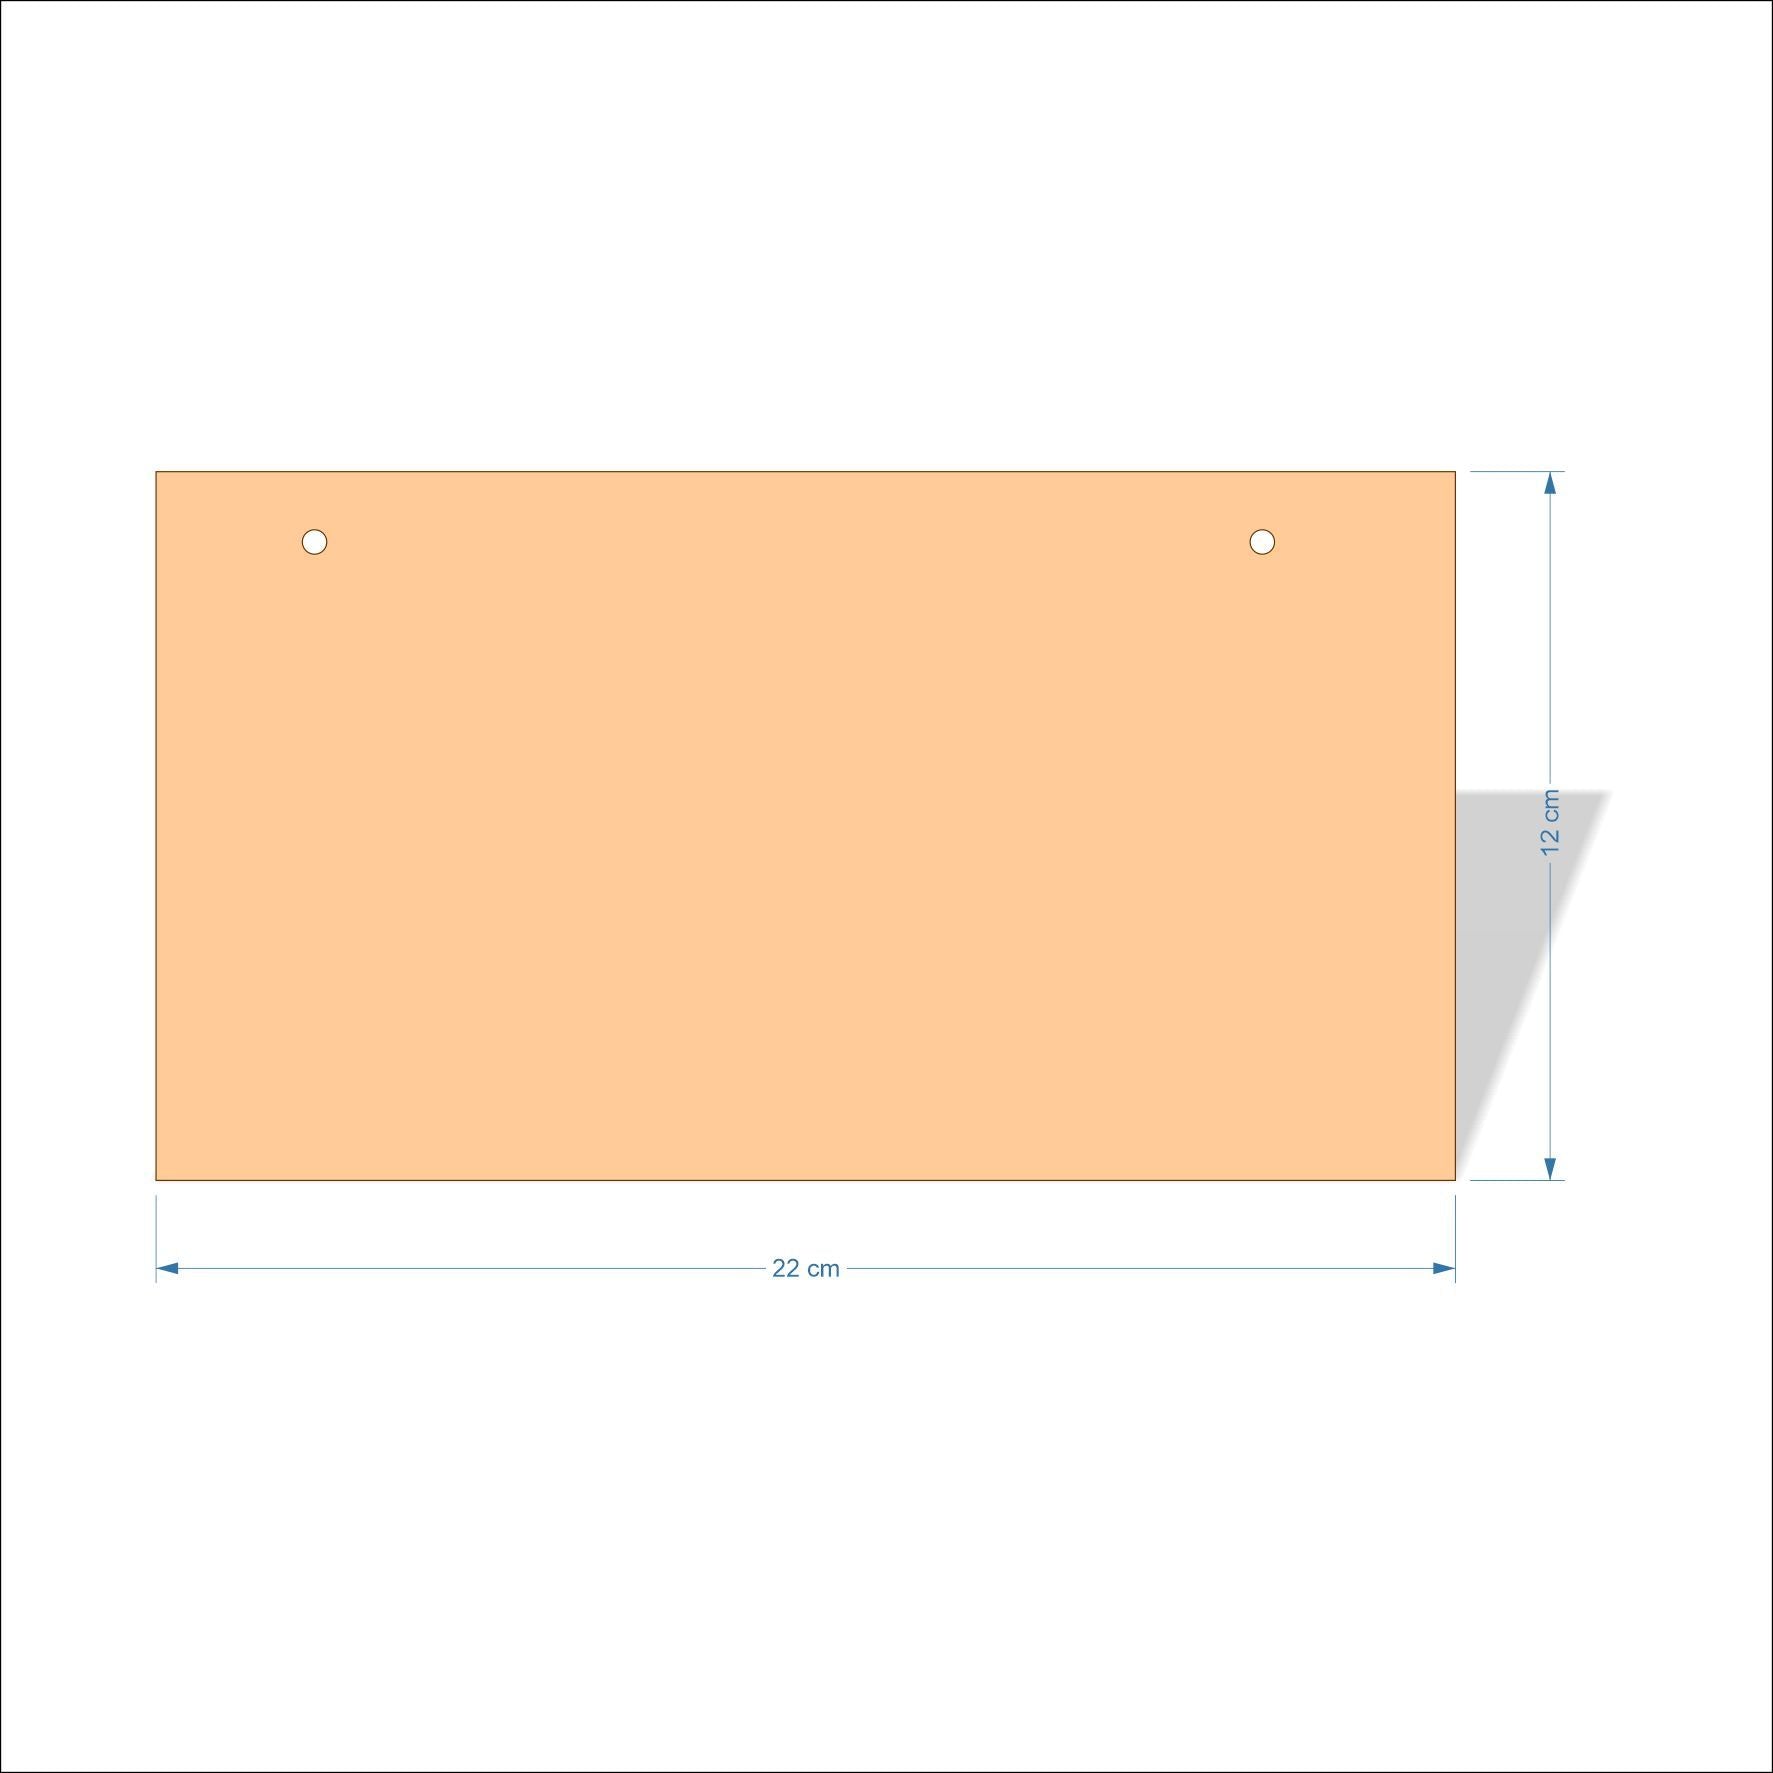 22 cm X 12 cm 3mm MDF Plaques with square corners